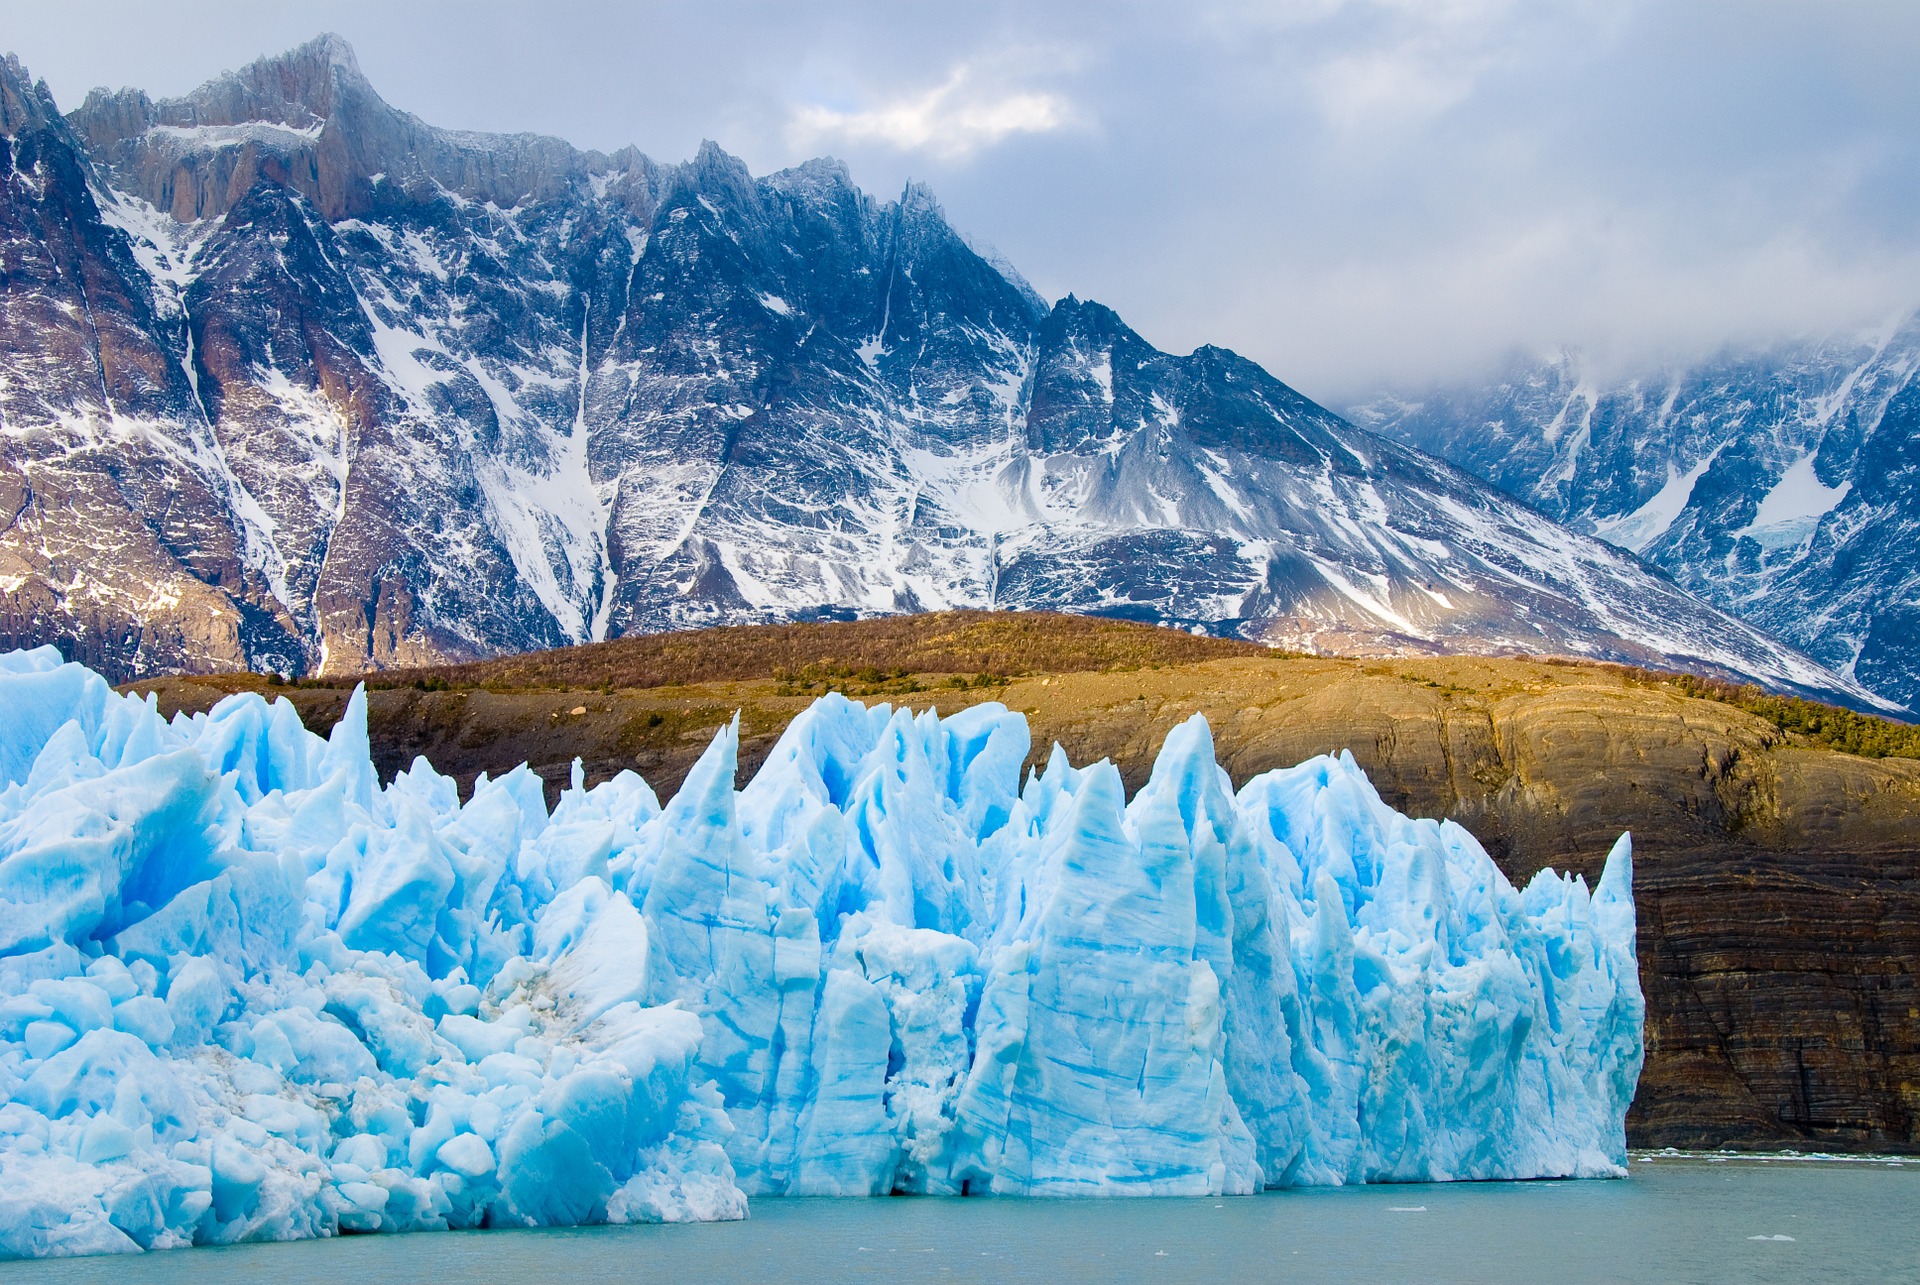 glacier chile - Travel Contests: April 8th, 2020 - Las Vegas, Patagonia, & more